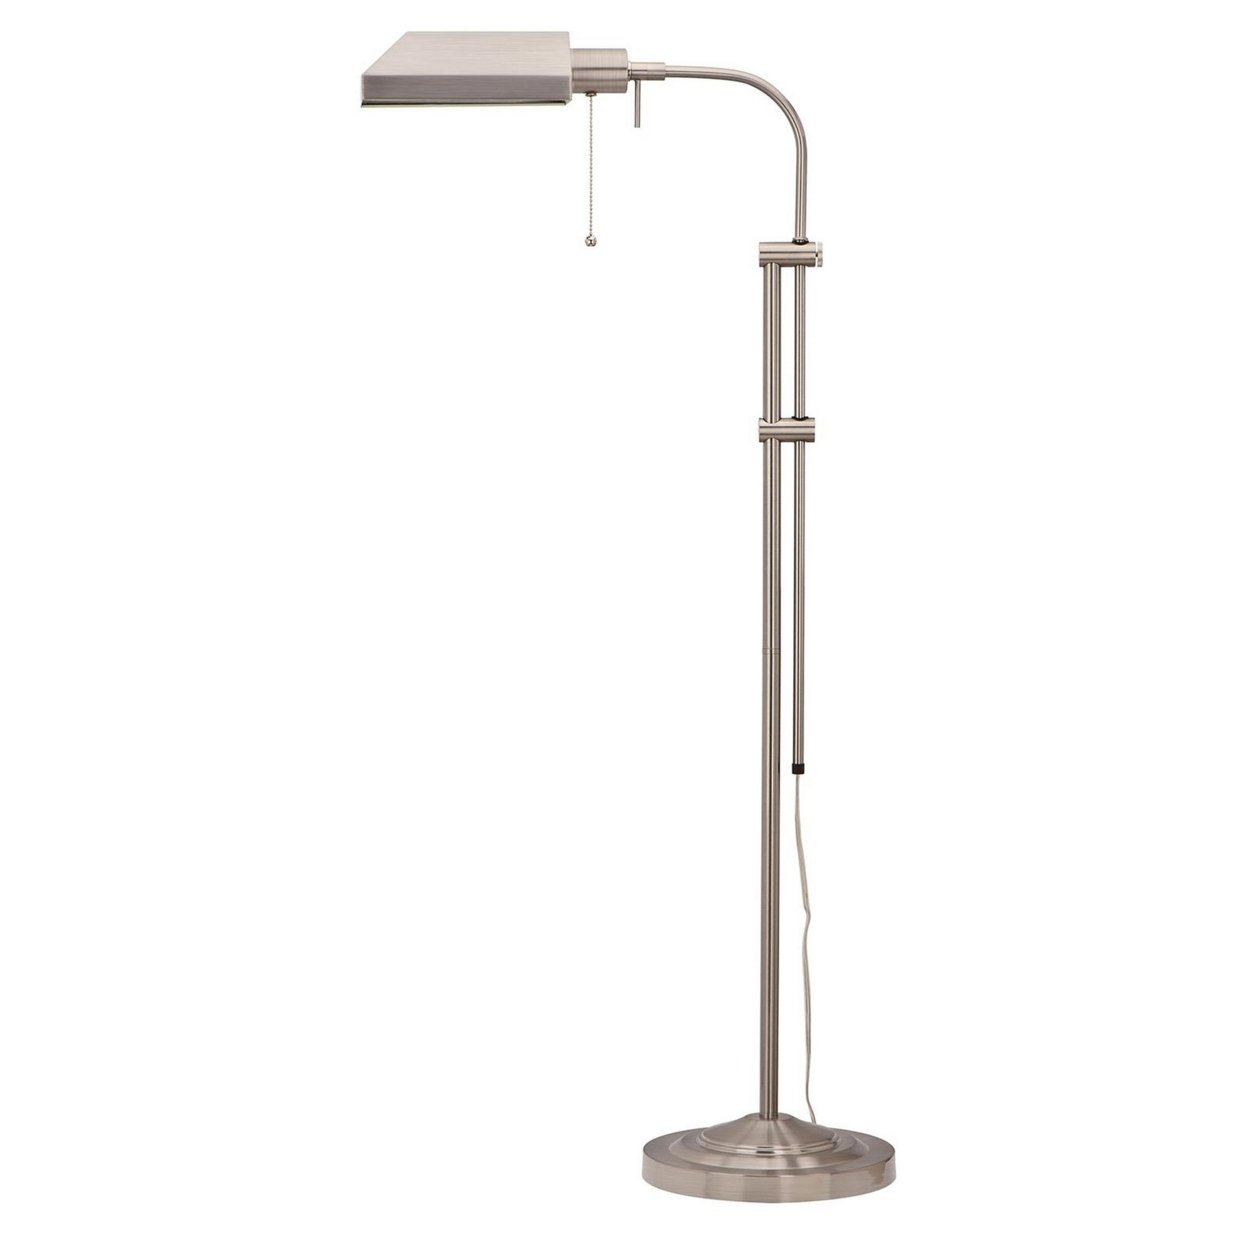 Metal Rectangular Floor Lamp With Adjustable Pole, White- Saltoro Sherpi